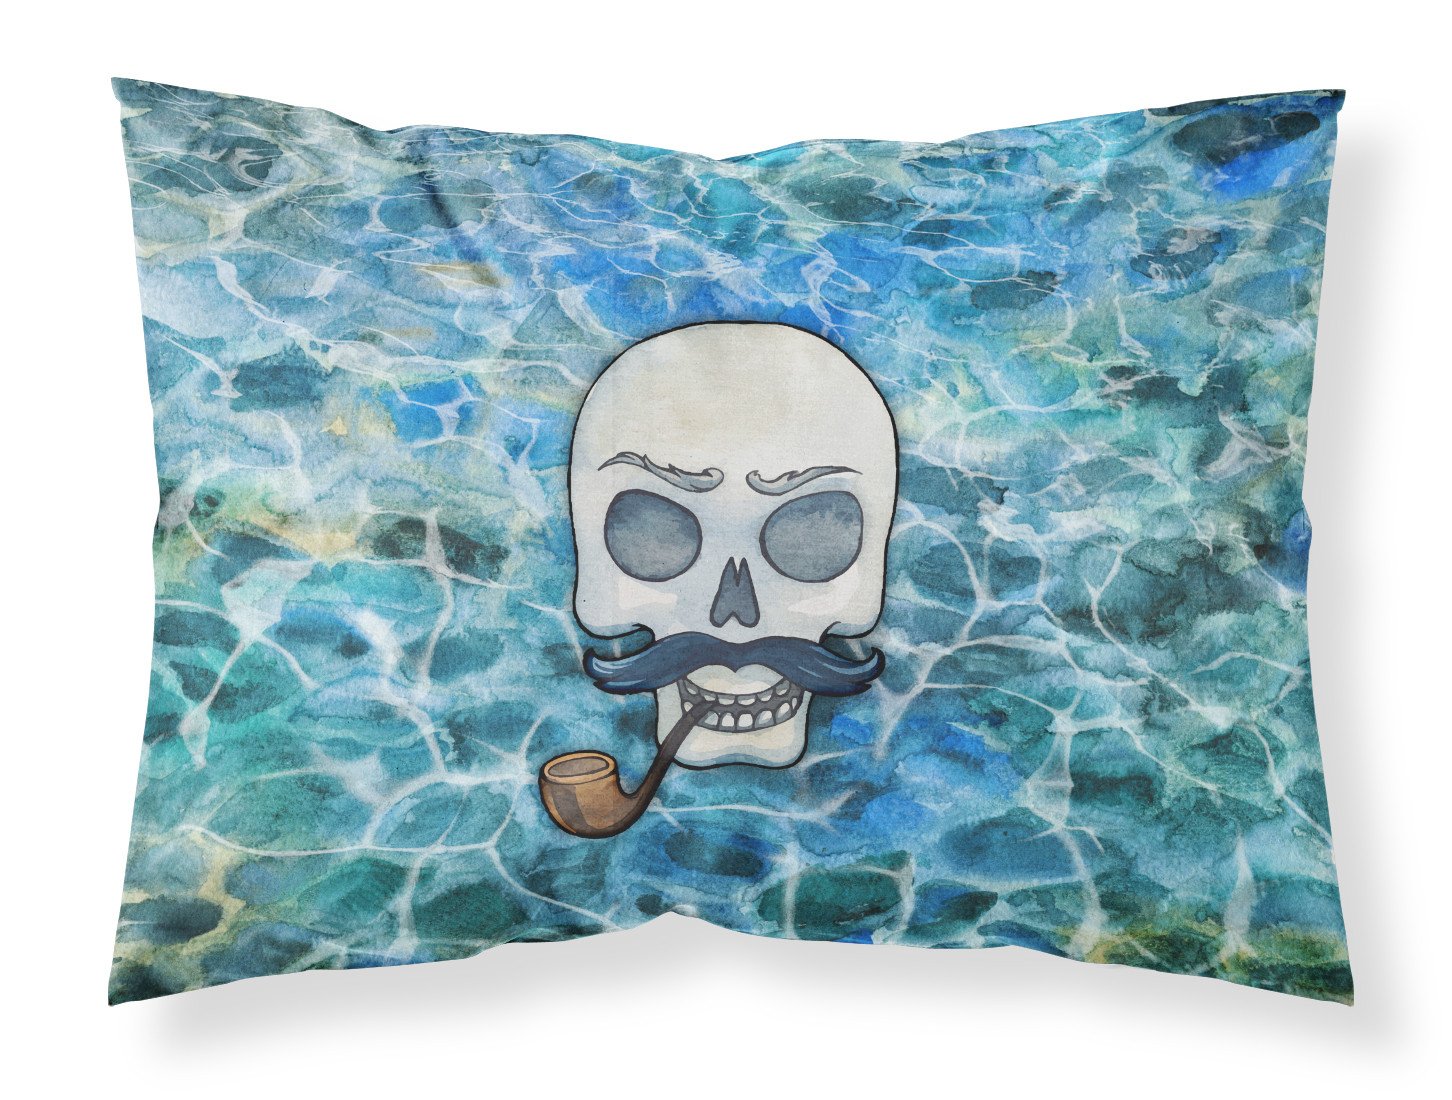 Skeleton Skull Pirate Fabric Standard Pillowcase BB5345PILLOWCASE by Caroline's Treasures